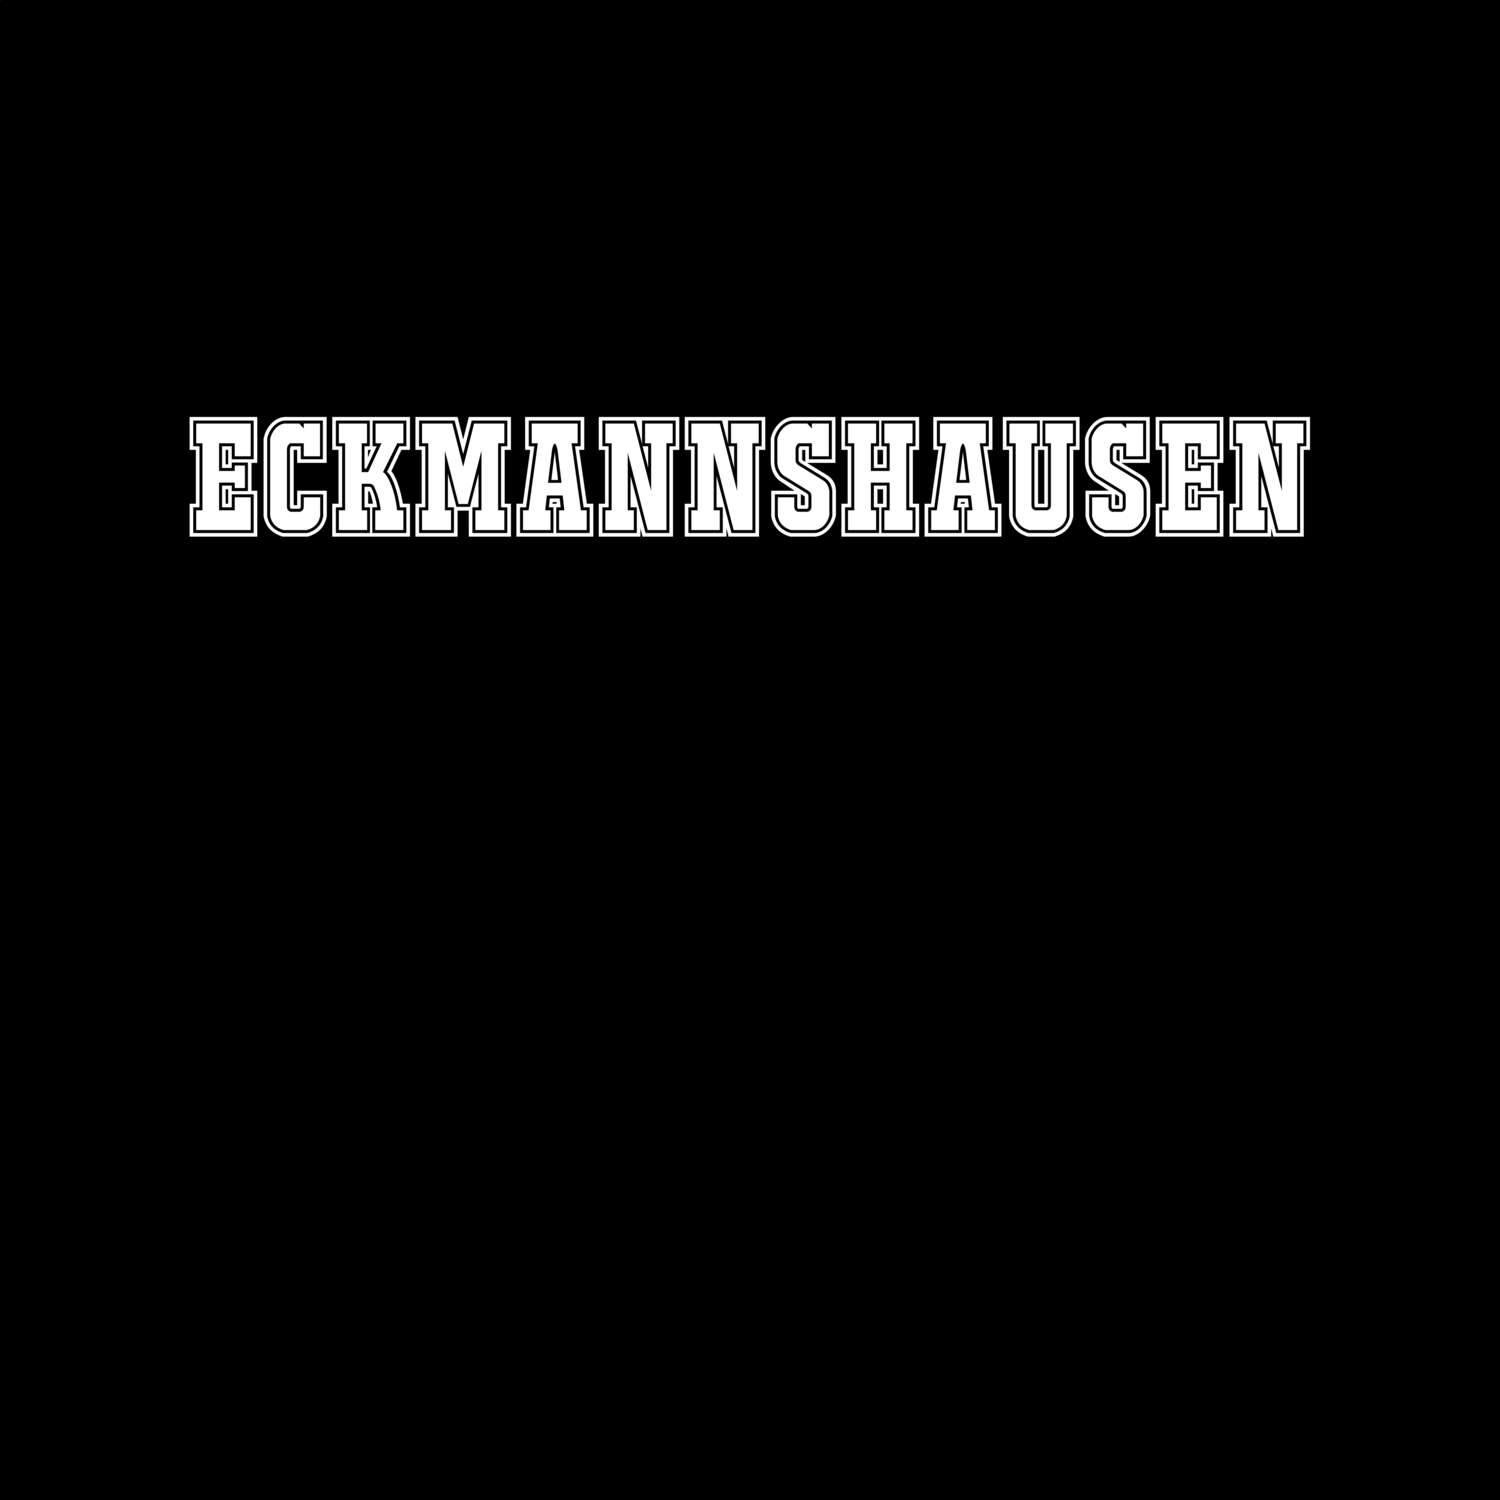 Eckmannshausen T-Shirt »Classic«